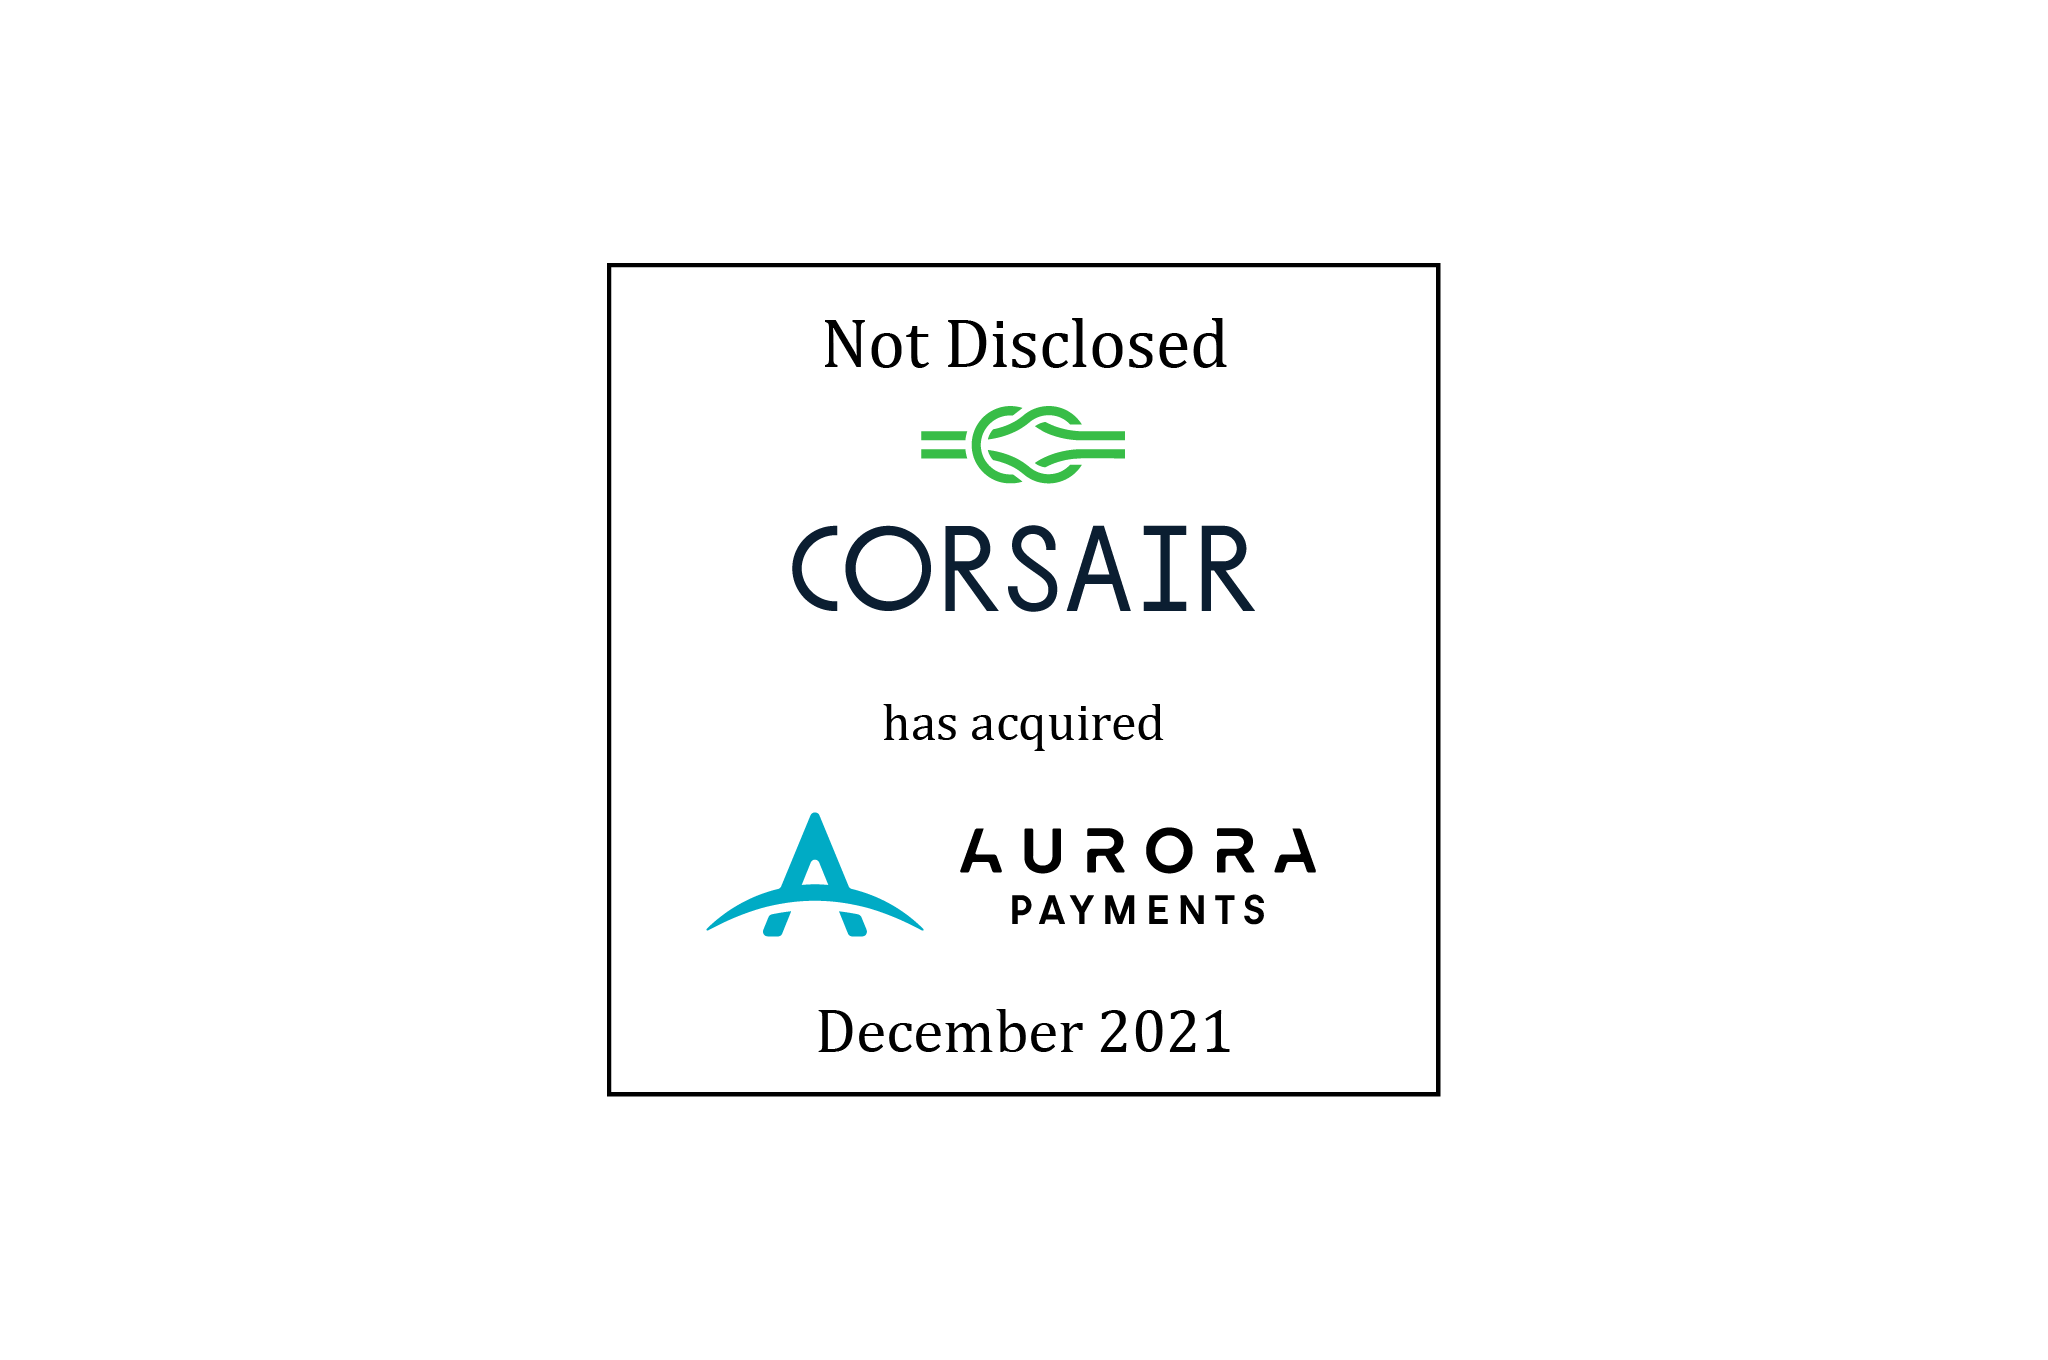 Corsair/Aurora Payments tombstone